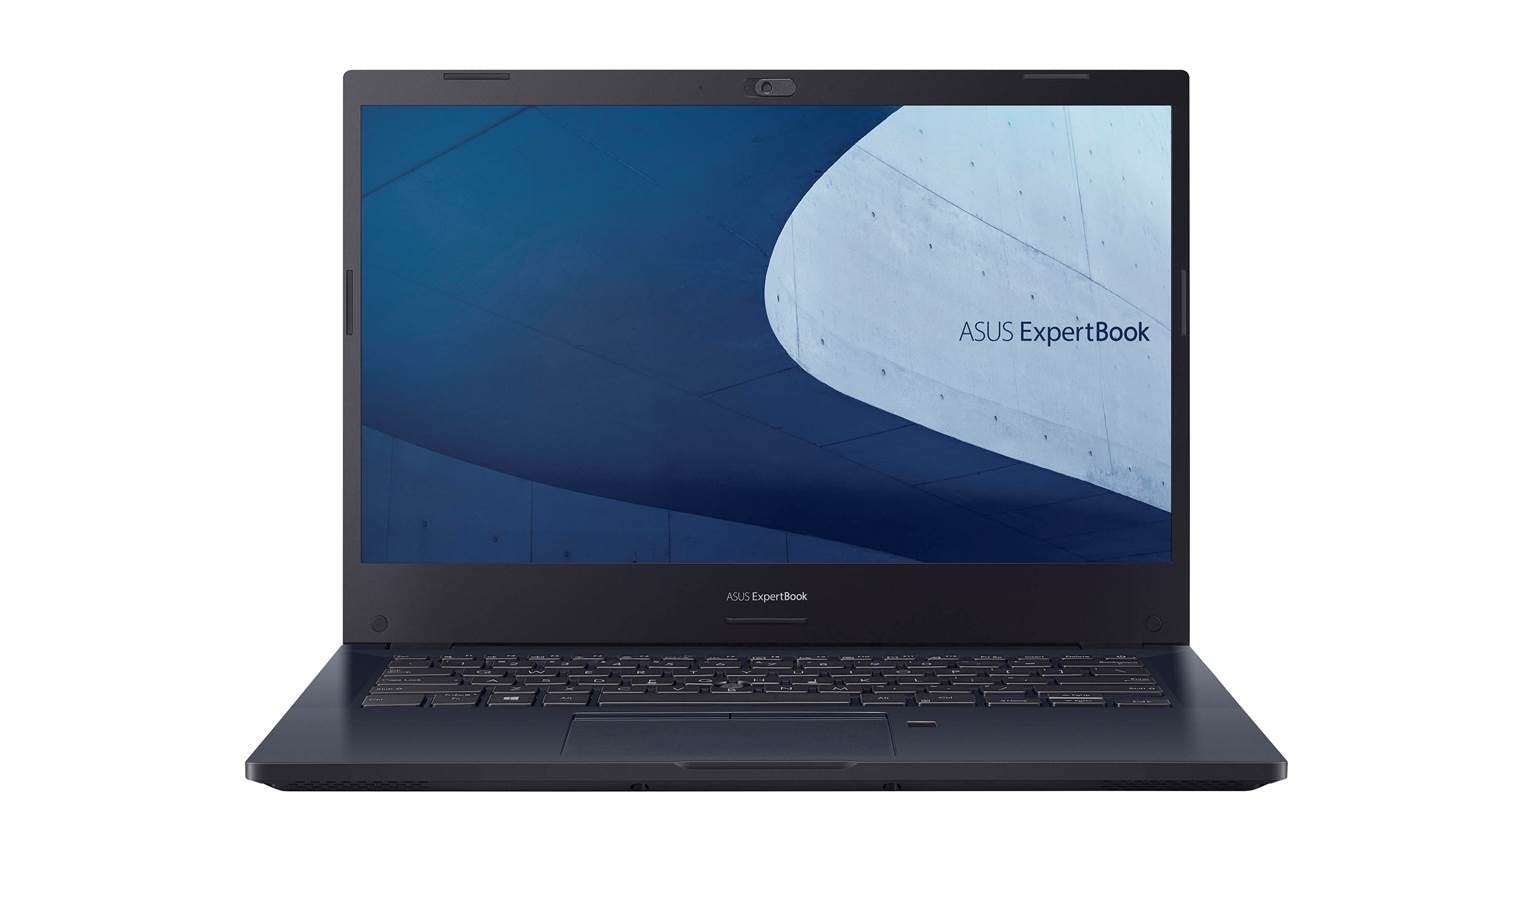 ASUS ExpertBook P2451FA (Core i5, 8GB/256GB, Windows 10) 14-inch Laptop | Harvey Norman Malaysia